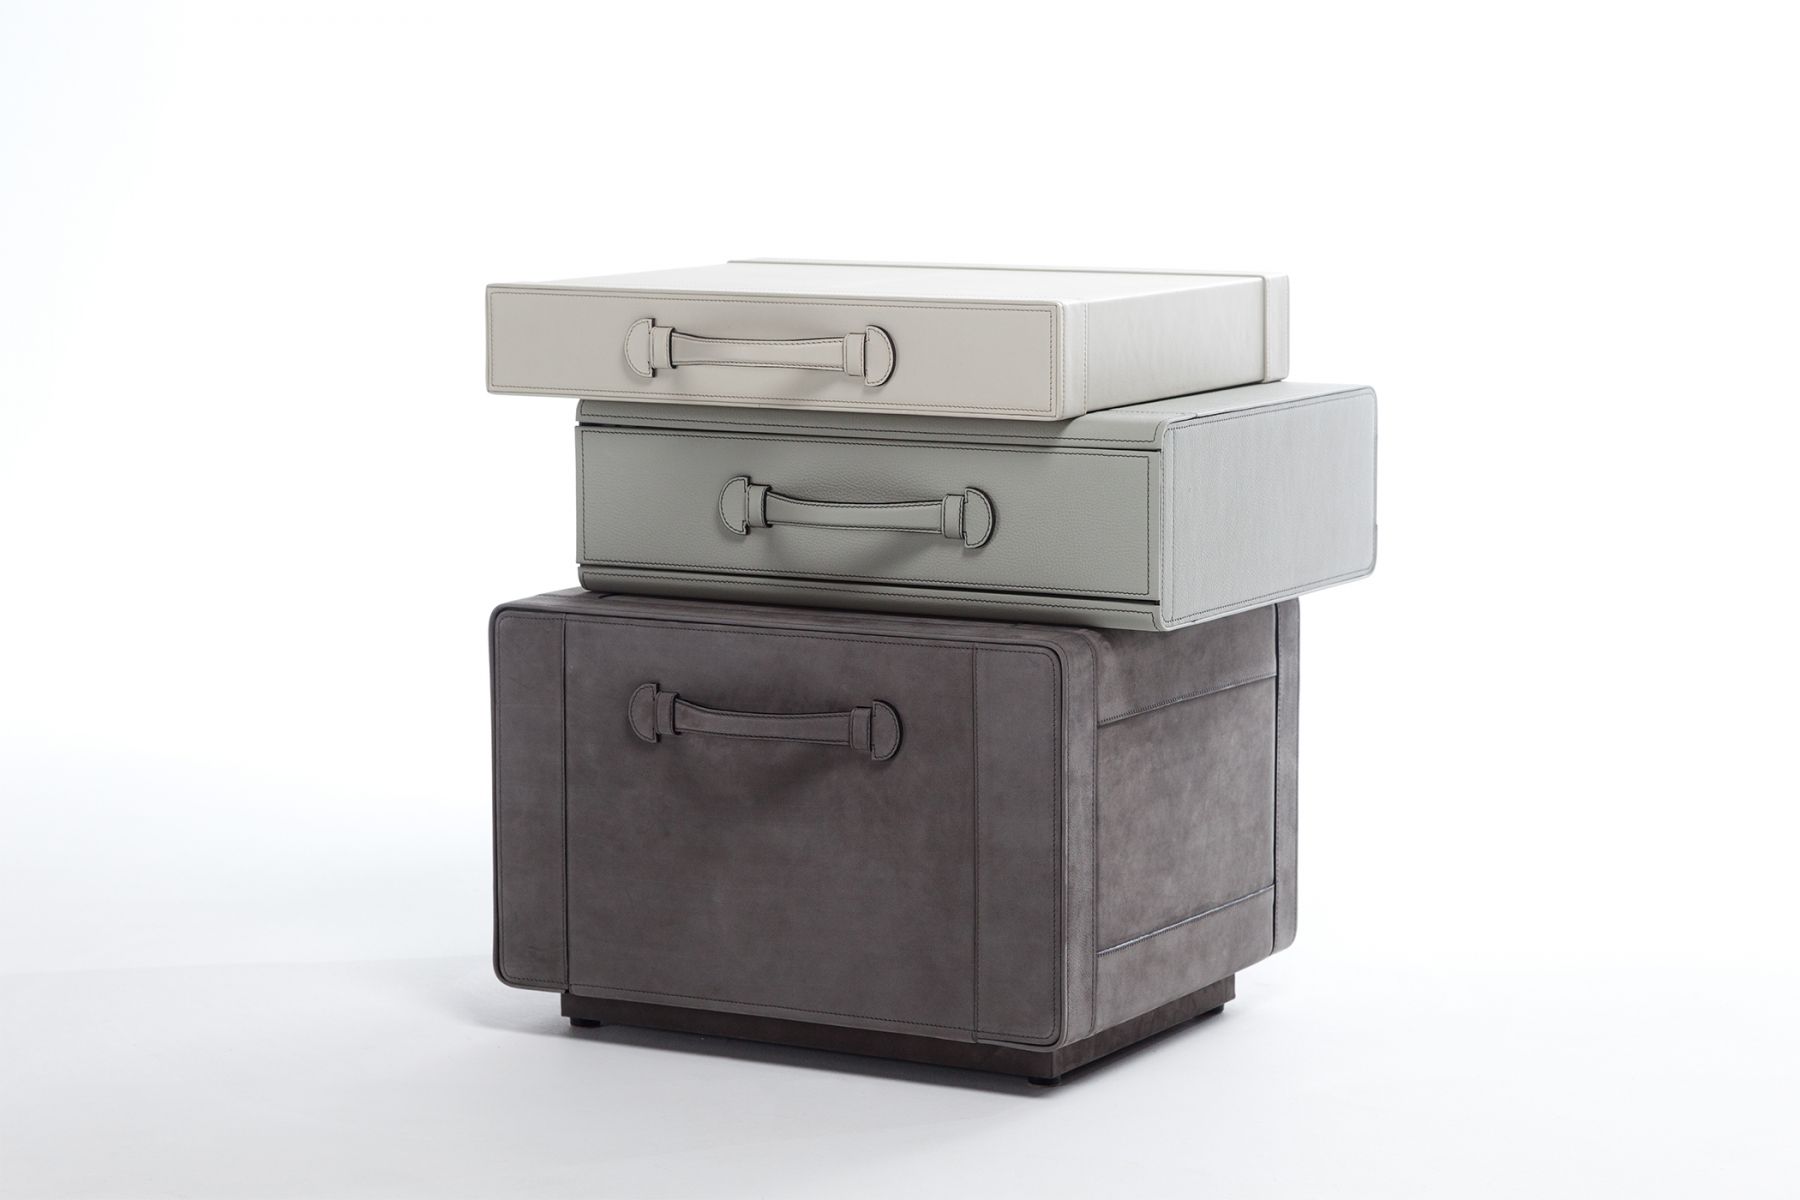 Comodini 'Bedside tables of briefcases' Maarten De Ceulaer pic-1